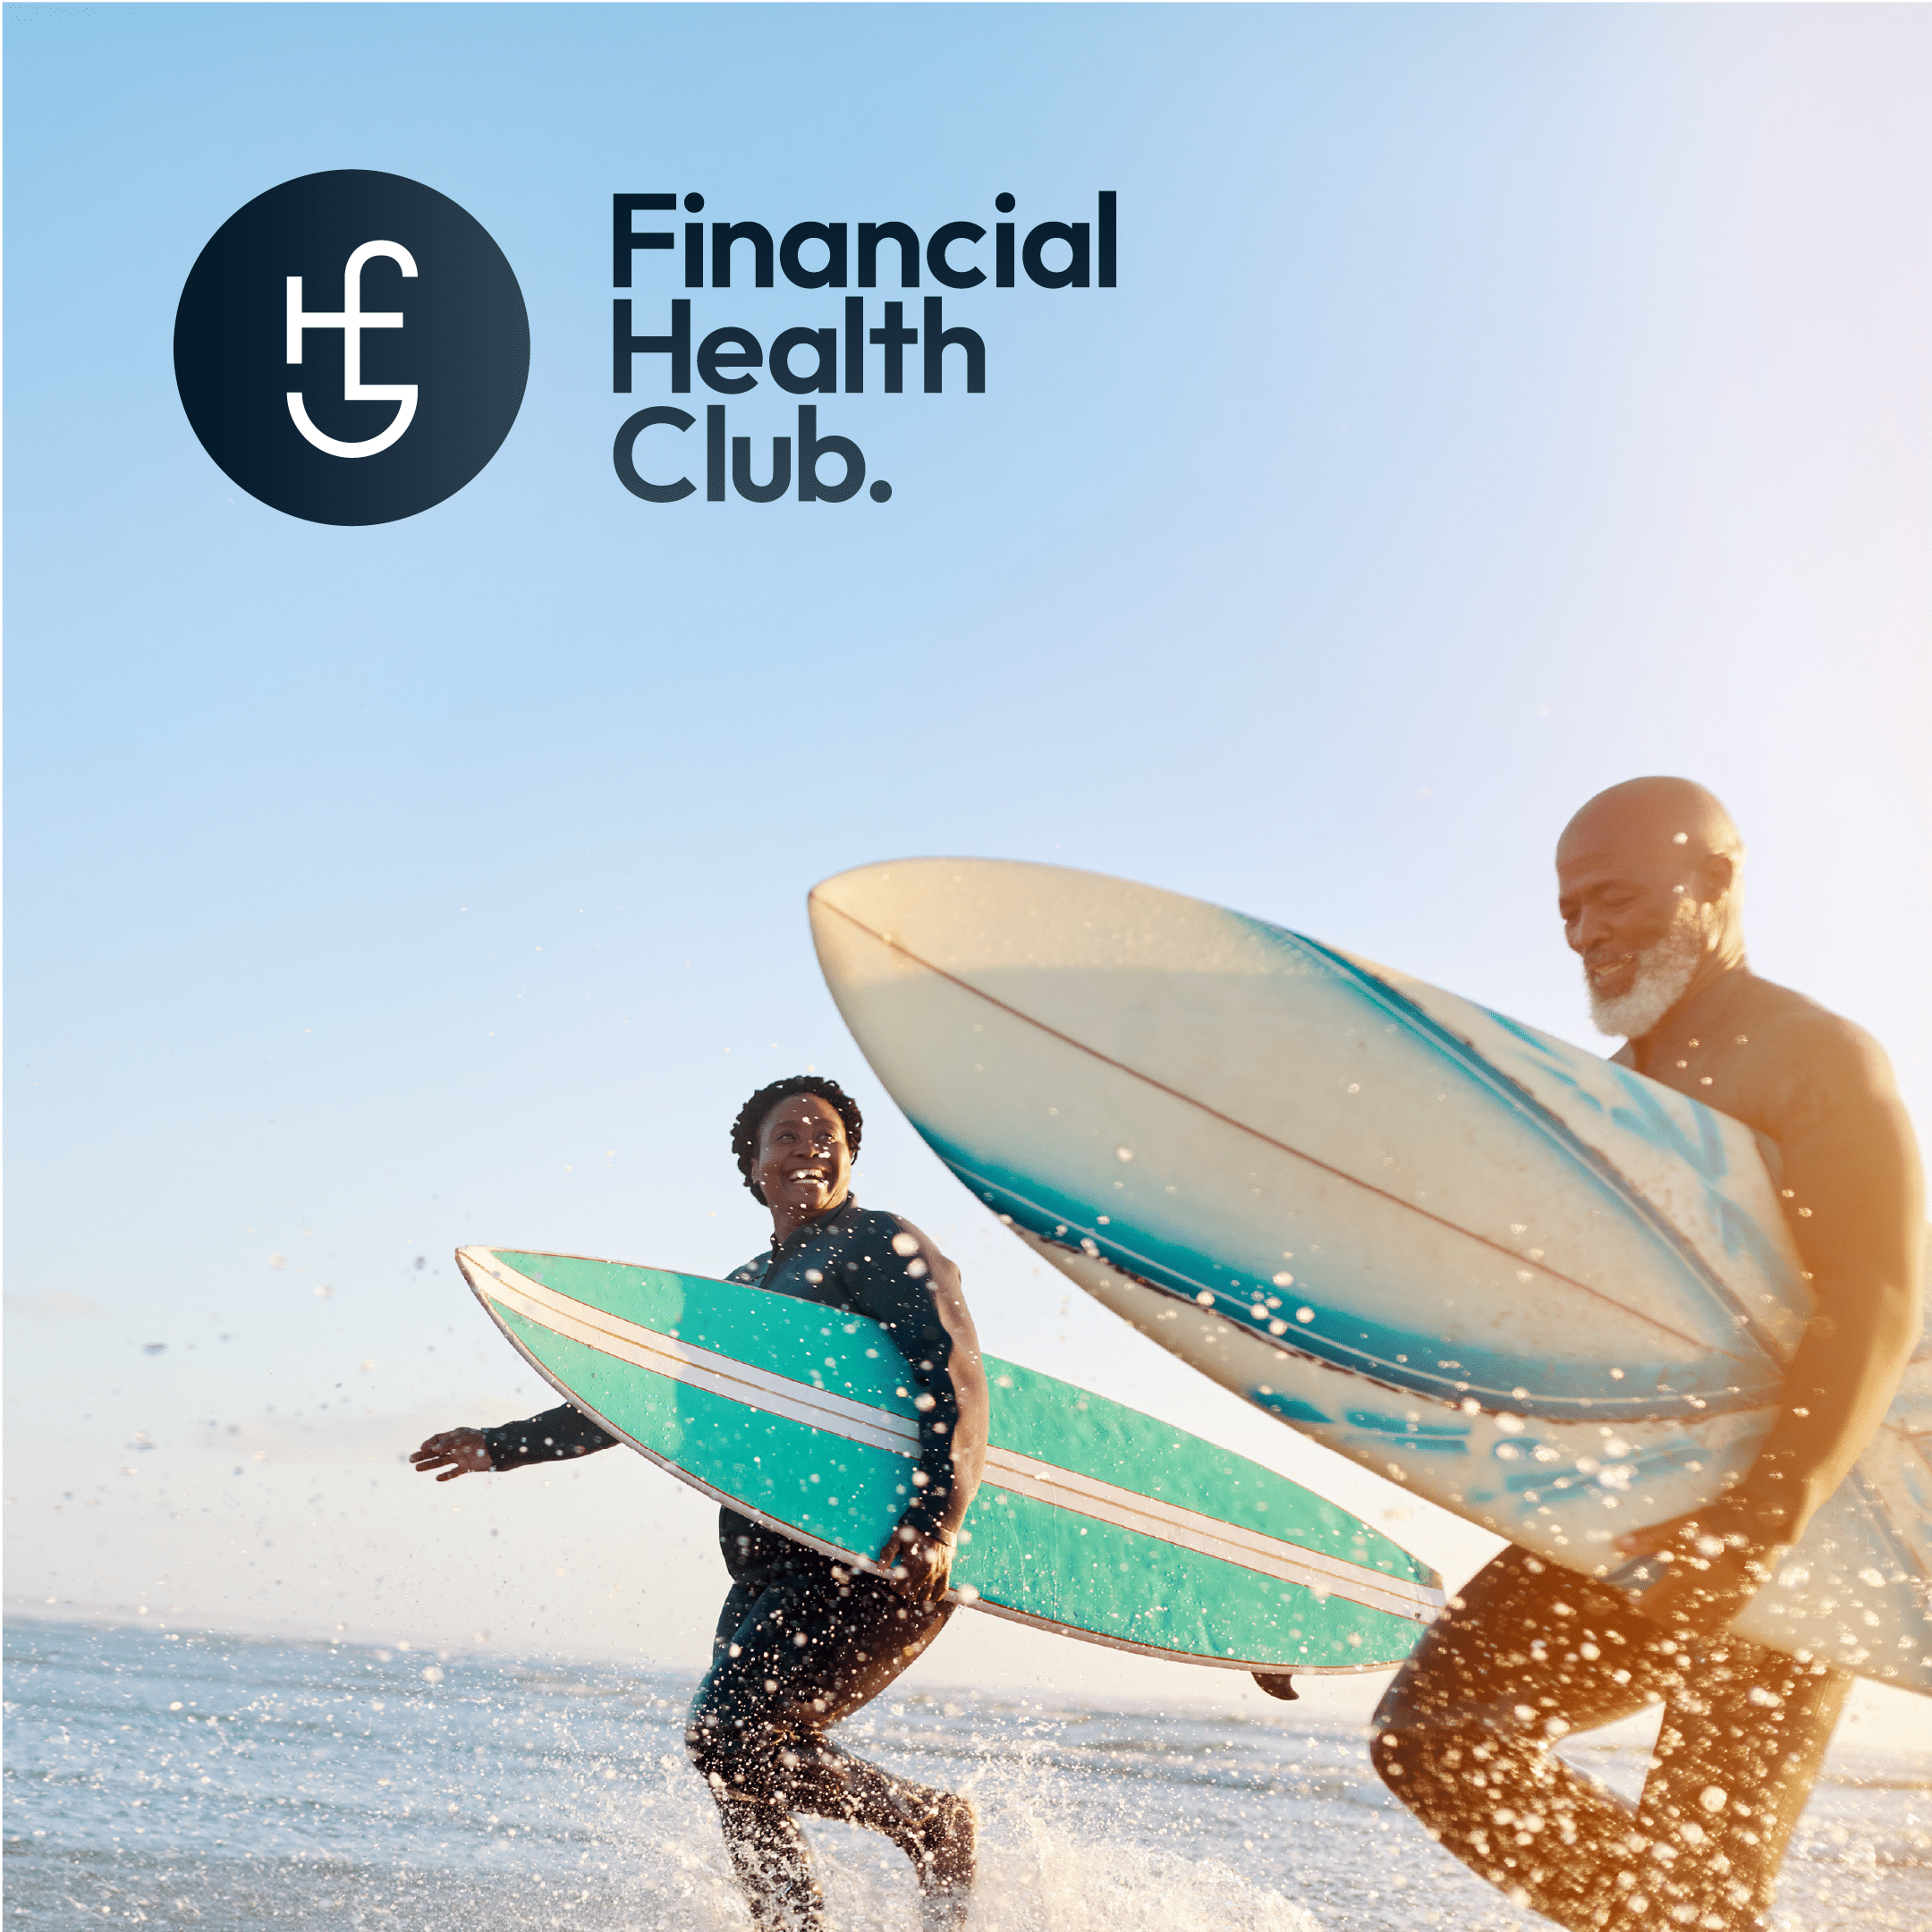 Financial Health Club - brand + website design